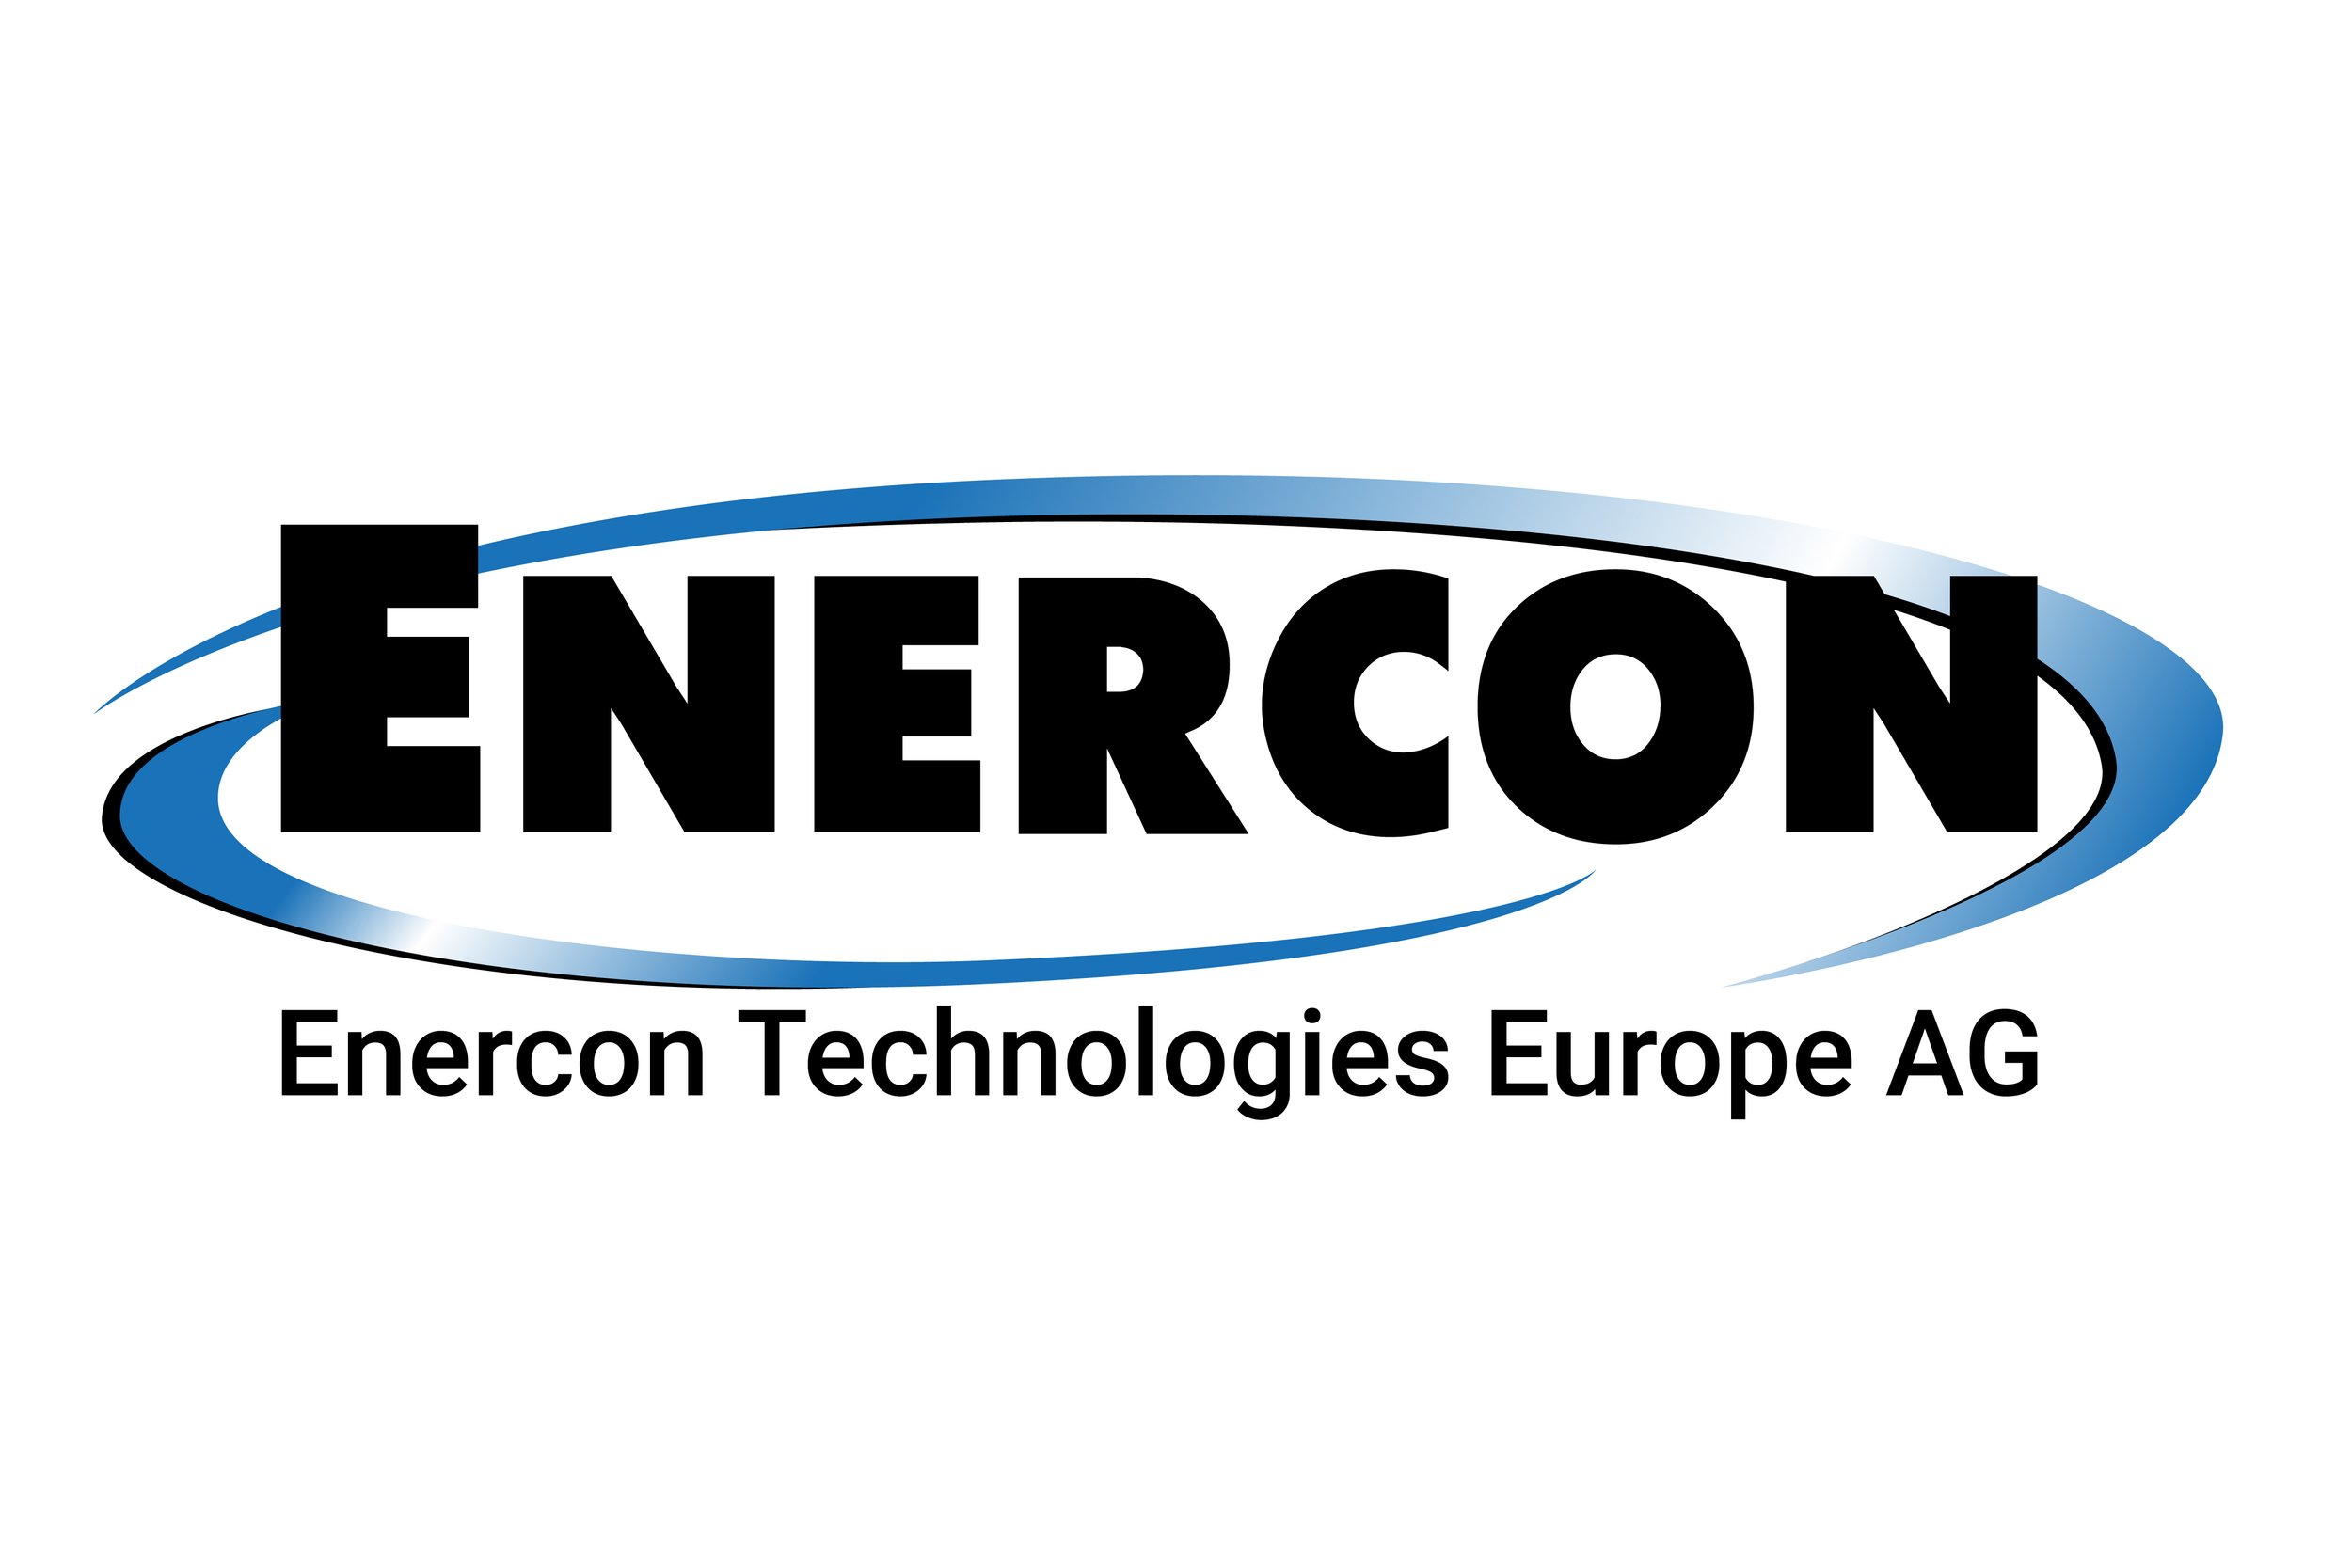 enercon_europe_logo_3x2.jpg